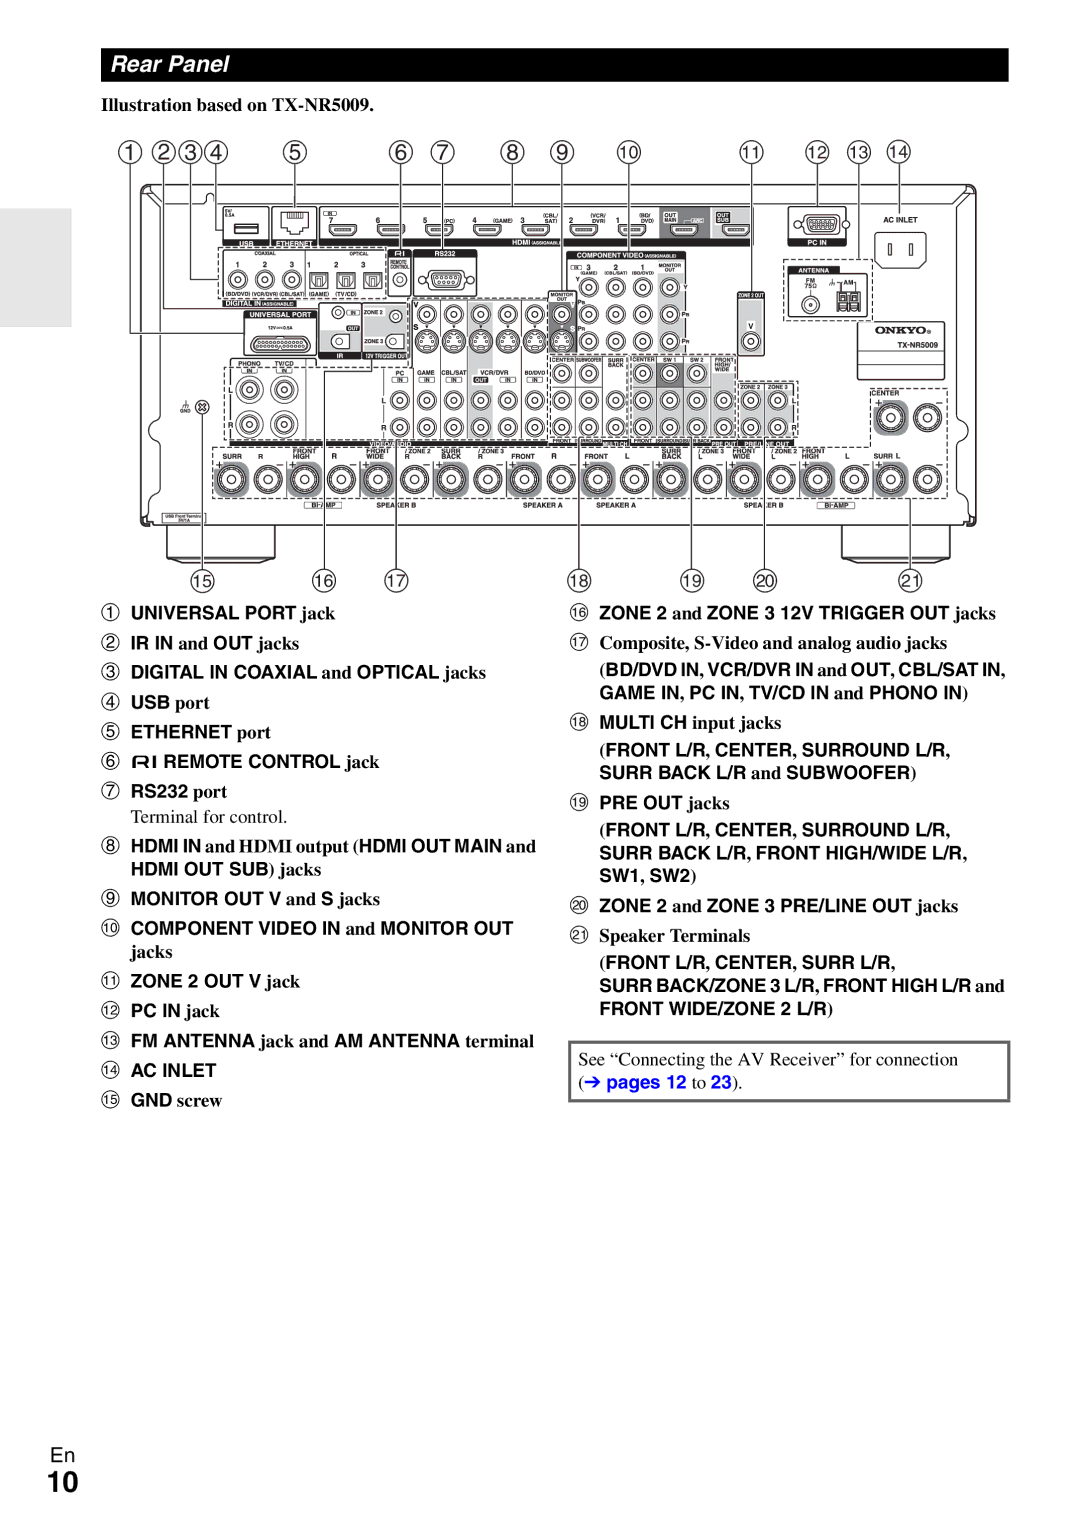 Onkyo TX-NR5009 Rear Panel, Zone 2 and Zone 3 12V Trigger OUT jacks, Zone 2 and Zone 3 PRE/LINE OUT jacks 